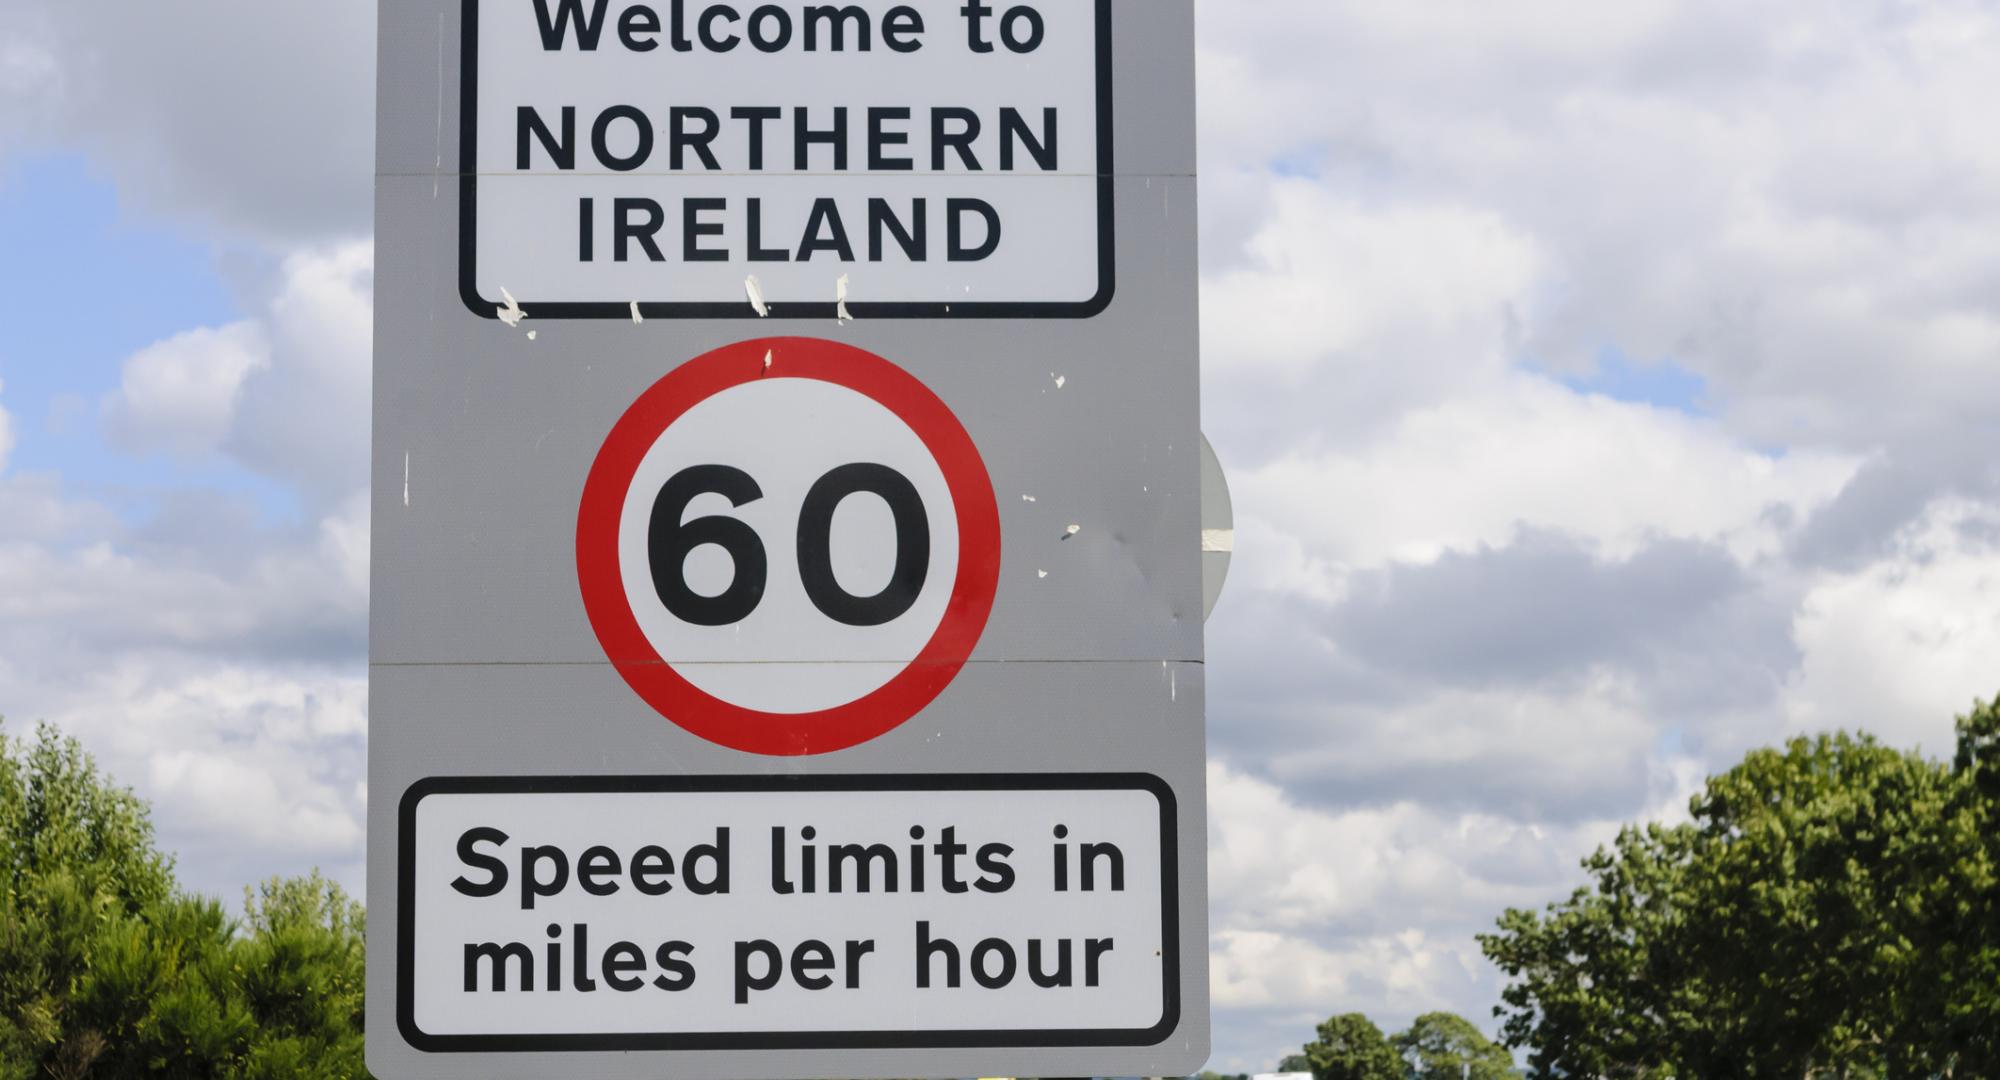 Northern Ireland welcome sign